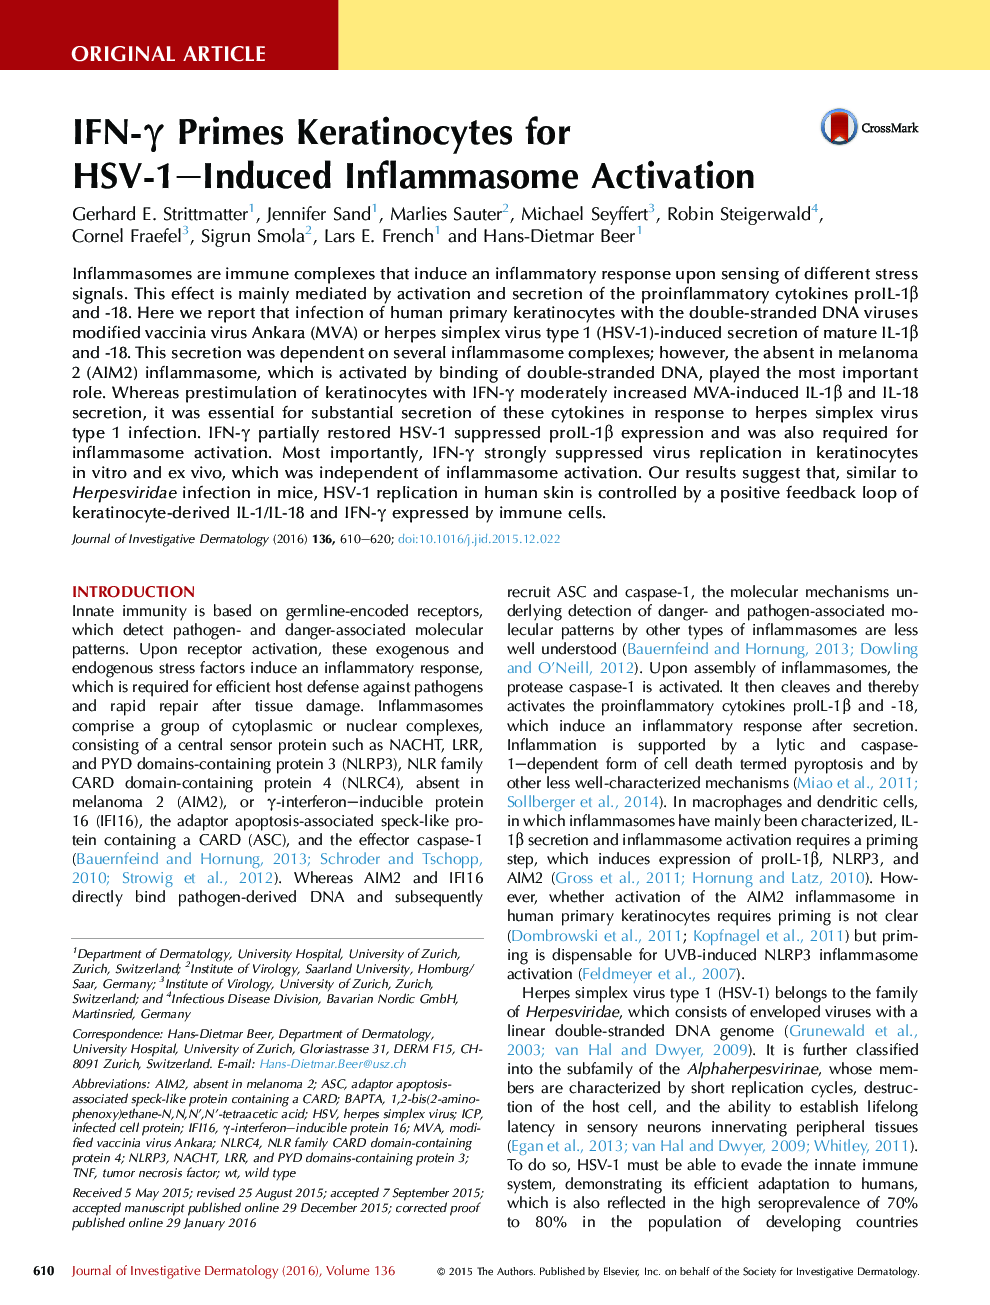 Original ArticleImmunology/InfectionIFN-Î³ Primes Keratinocytes for HSV-1-Induced Inflammasome Activation